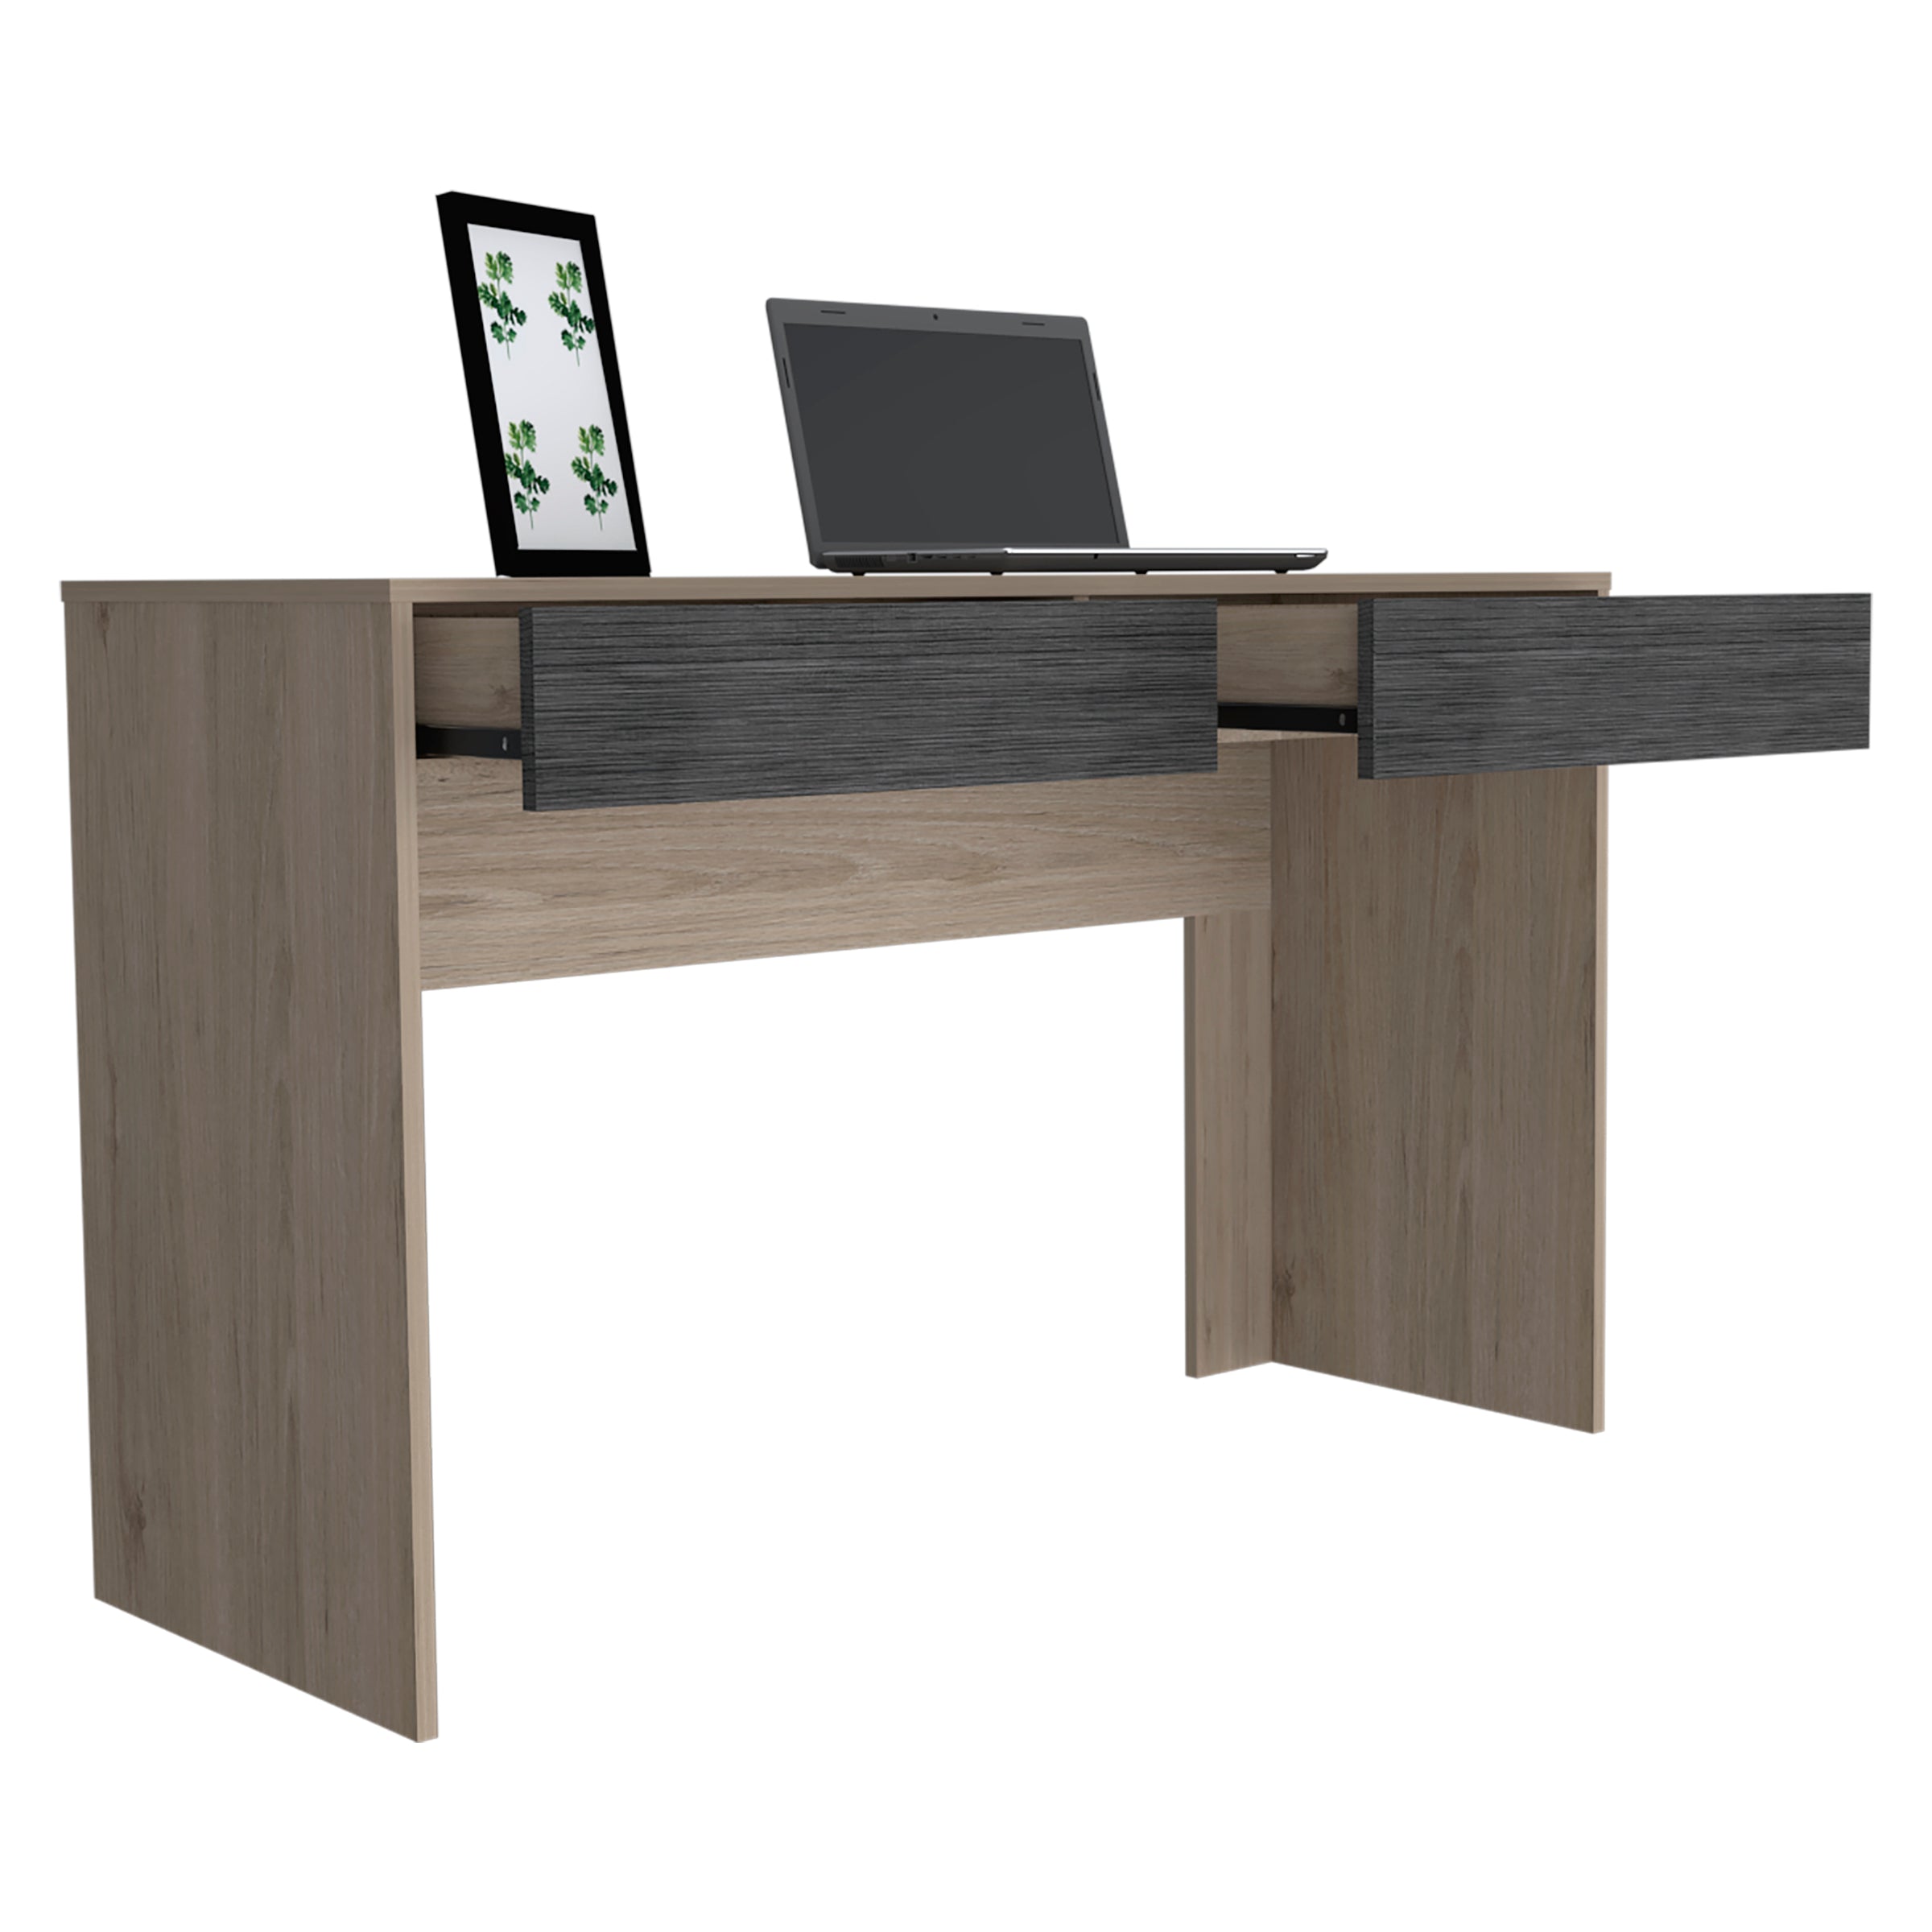 2 Drawer Wooden Desk